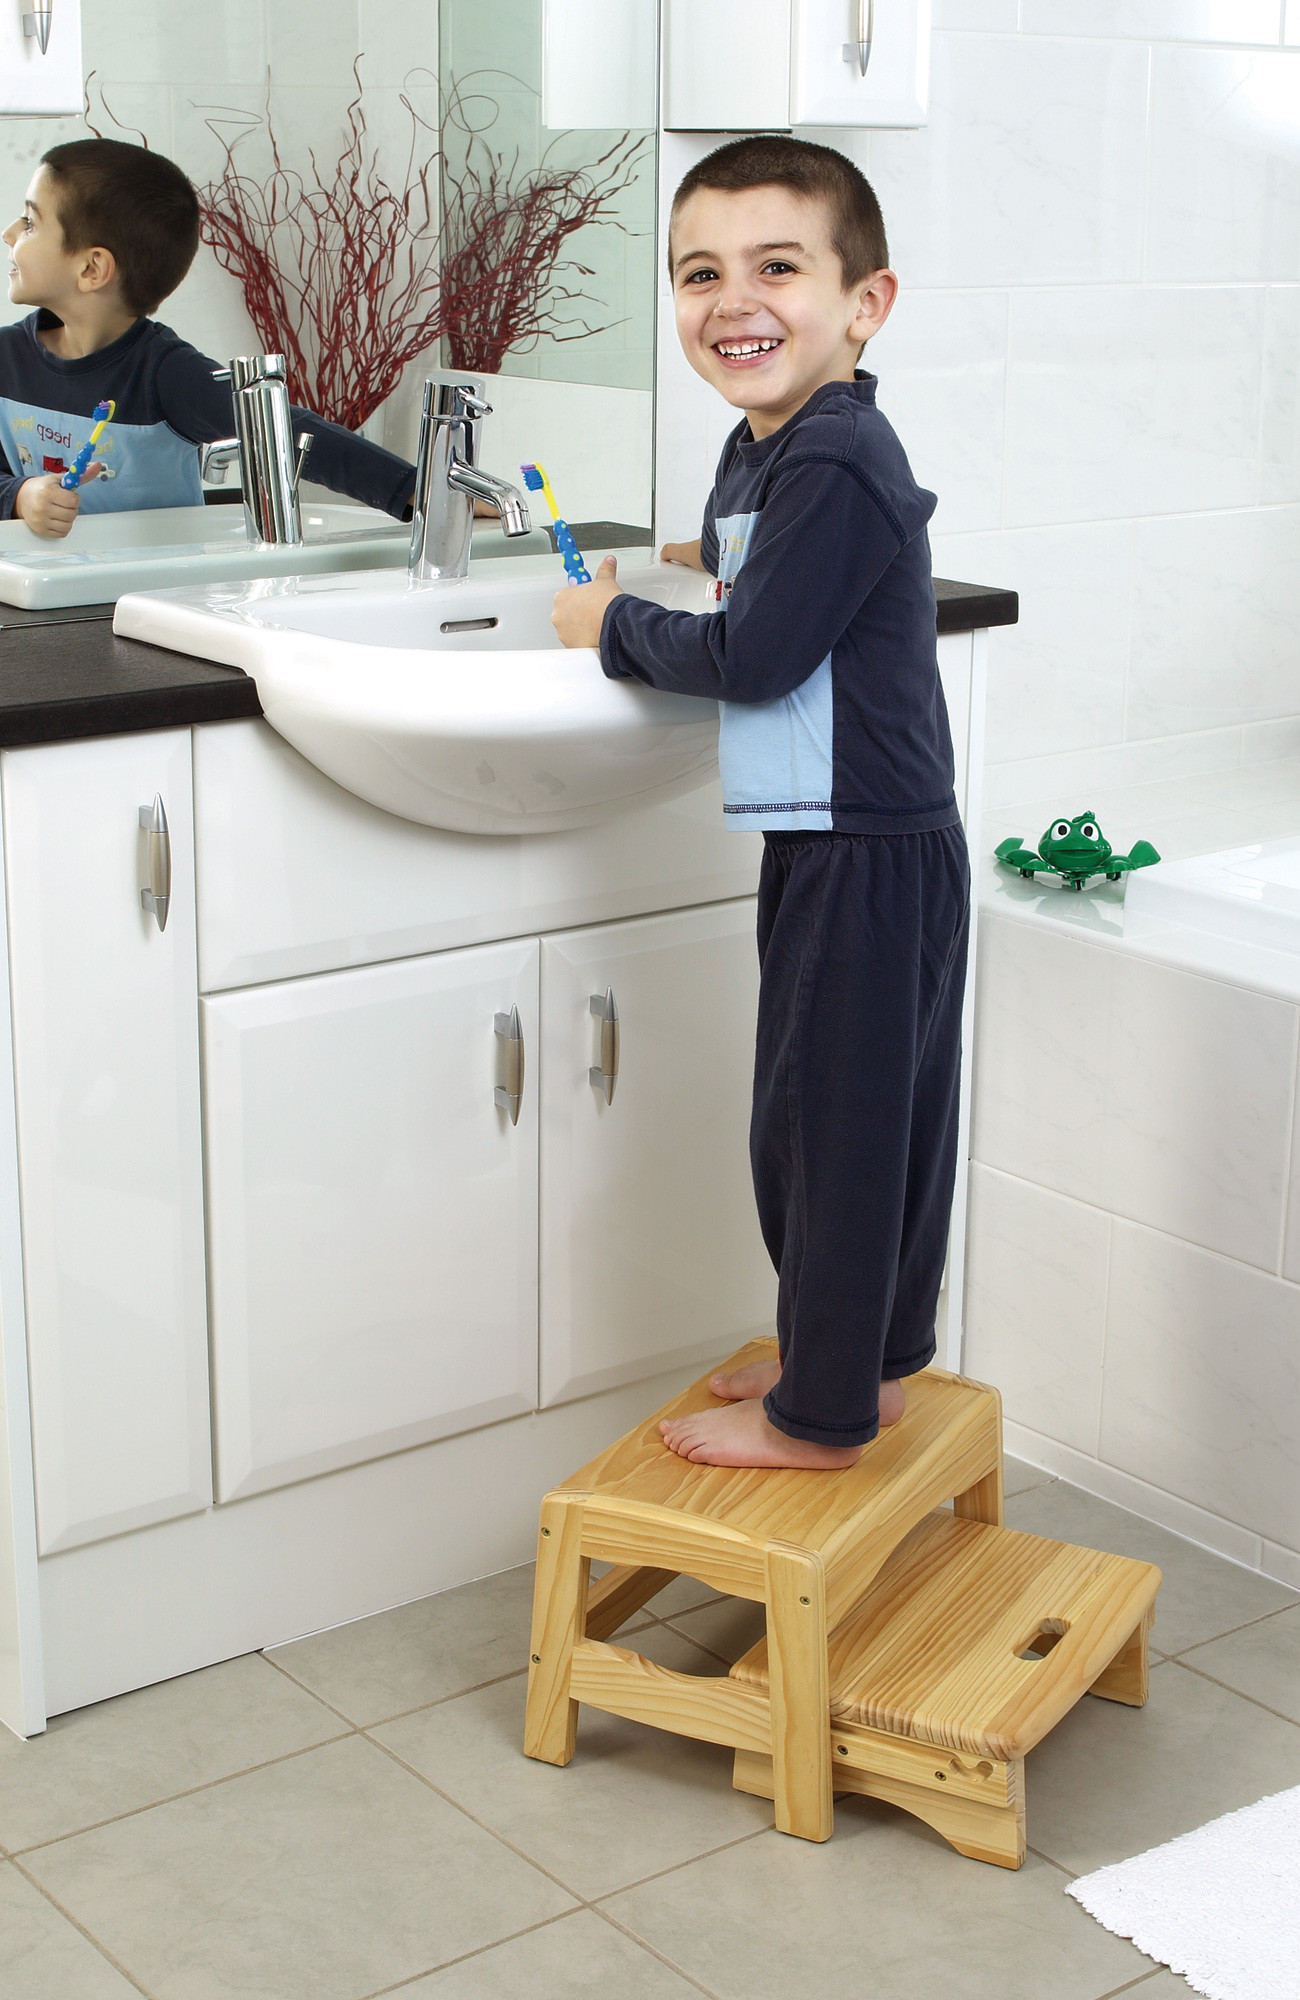 Kids Bathroom Step Stools
 Safety 1st WOODEN STEP STOOL Baby Child Bathroom Potty